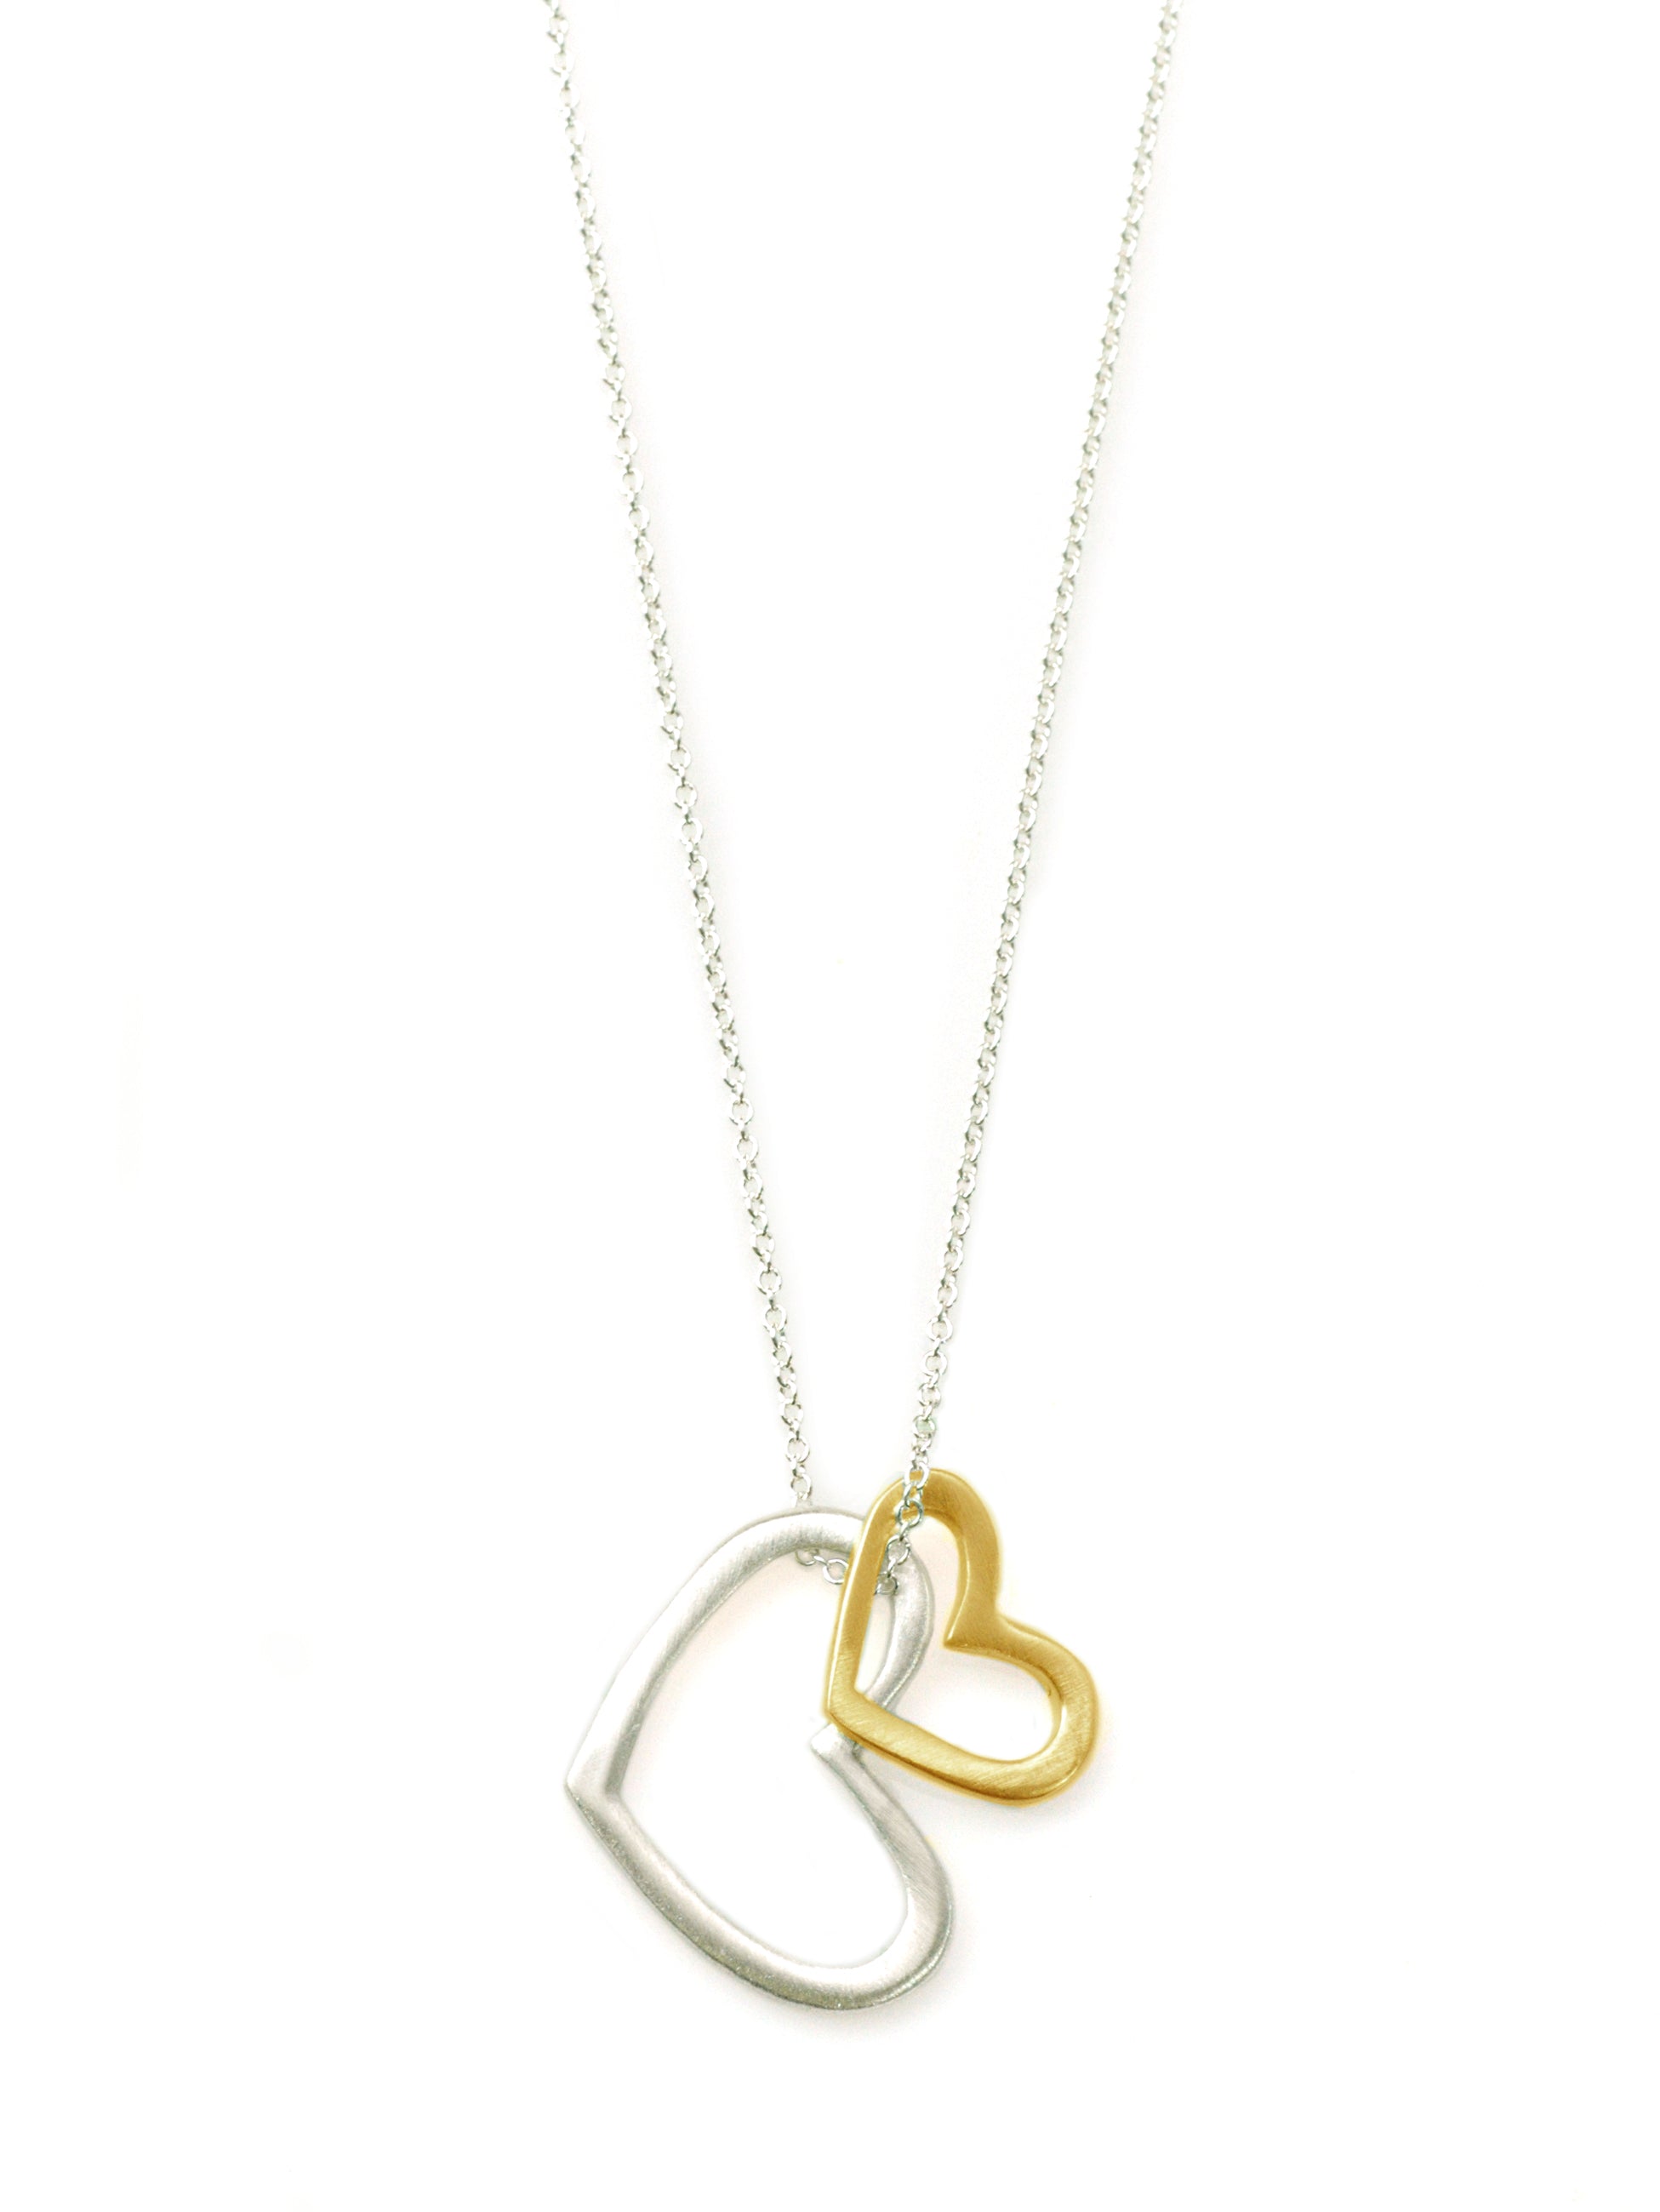 Silver & Vermeil Open Heart Necklace